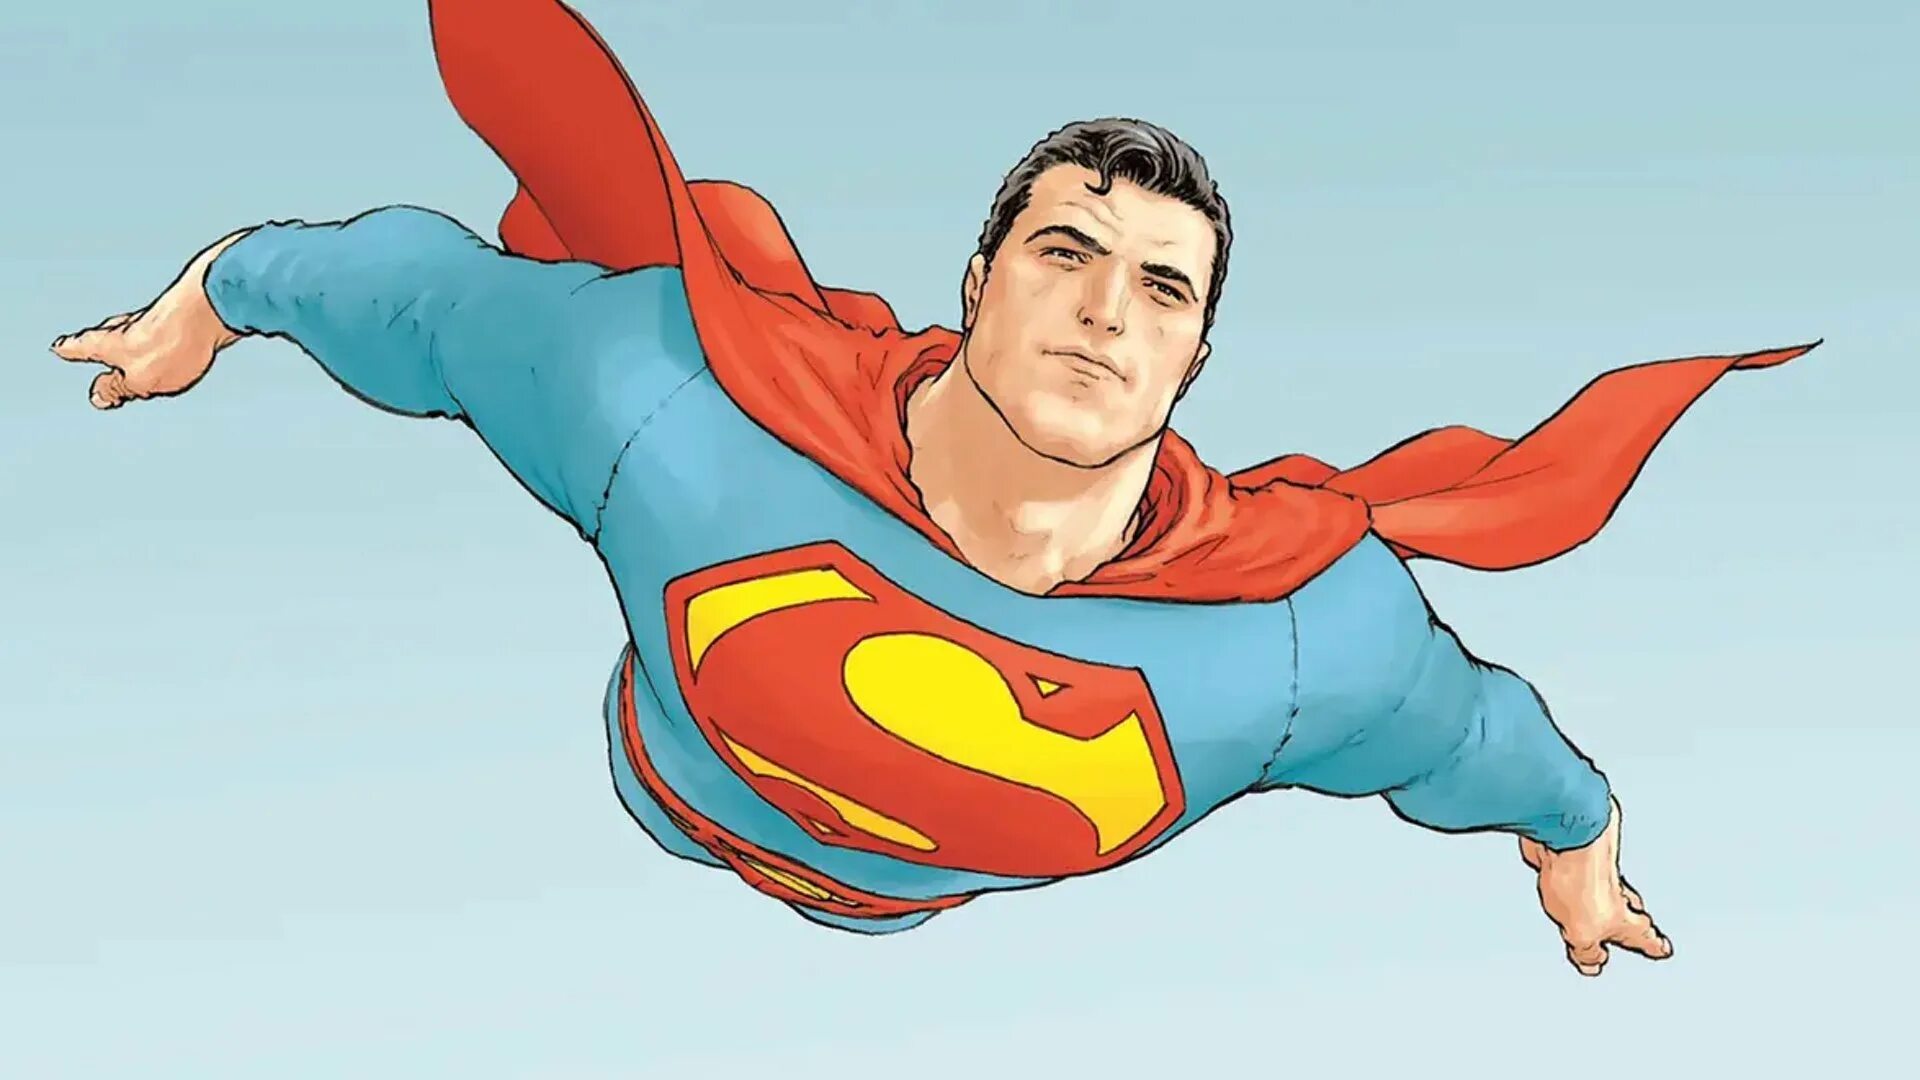 Superman legacy. Frank Quitely. Superman Frank Quitely. Frank Quitely Art. Супермен смешные картинки.